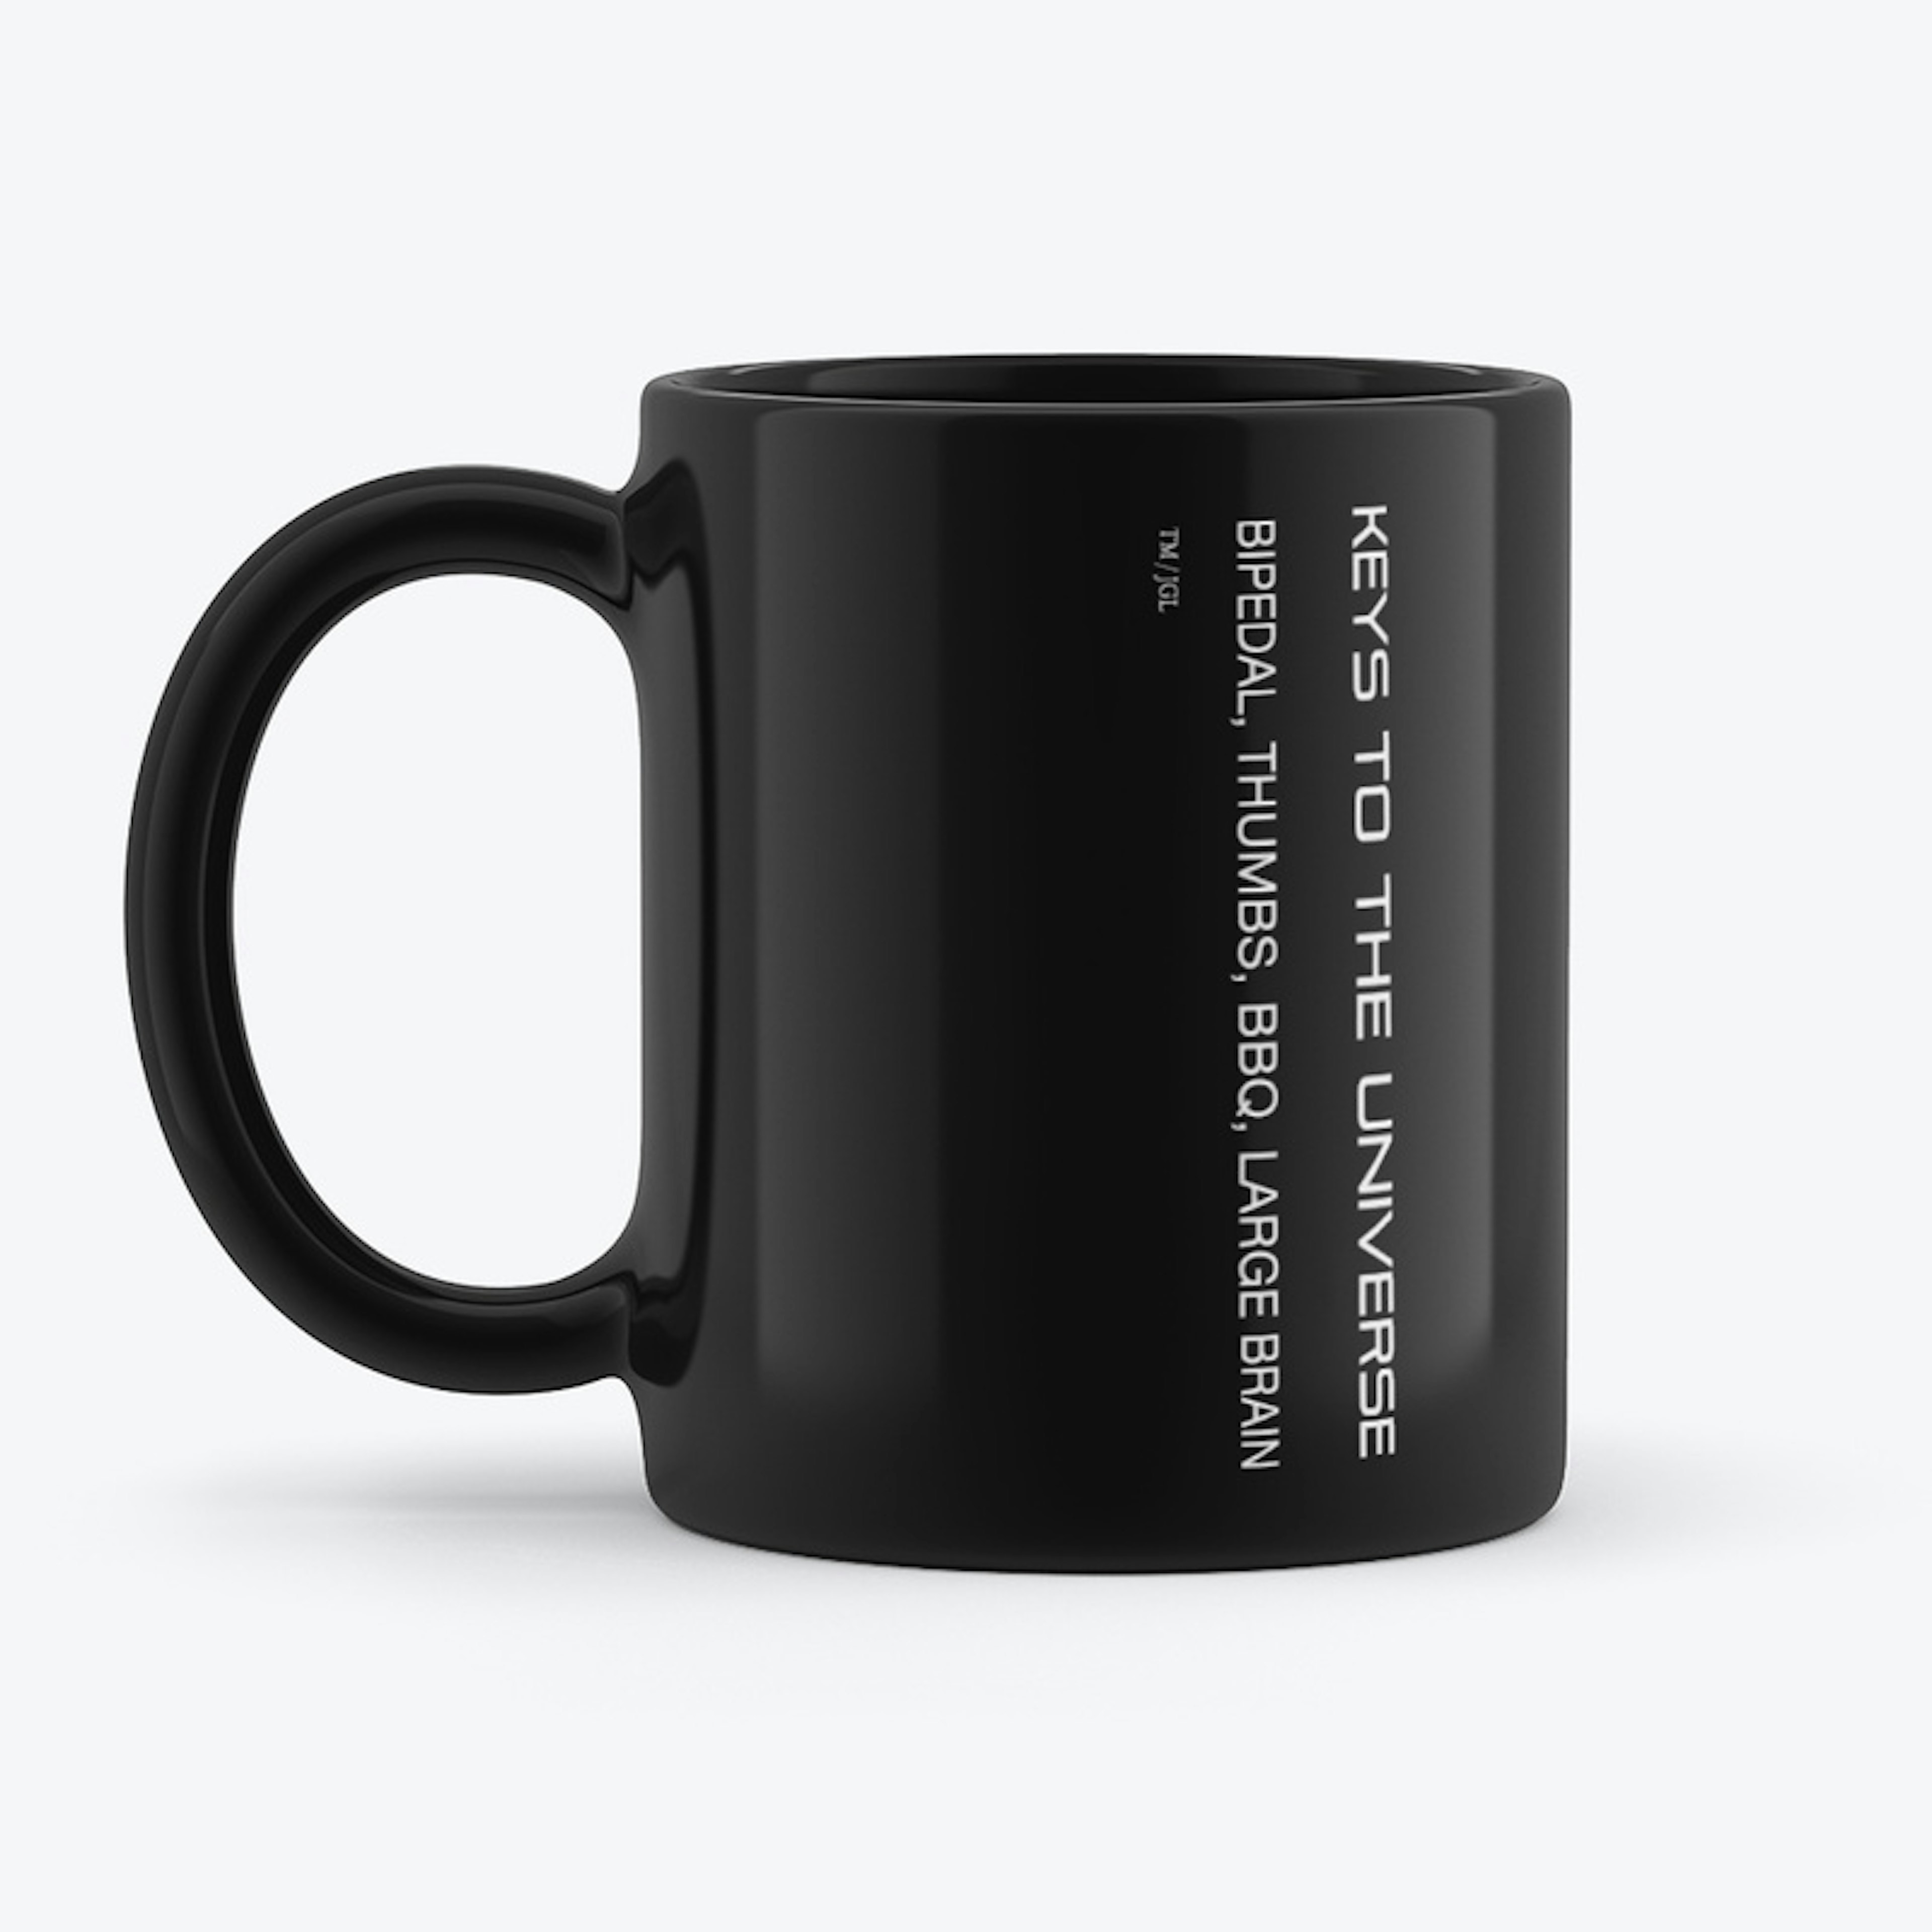 KEYS TO THE UNIVERSE mug